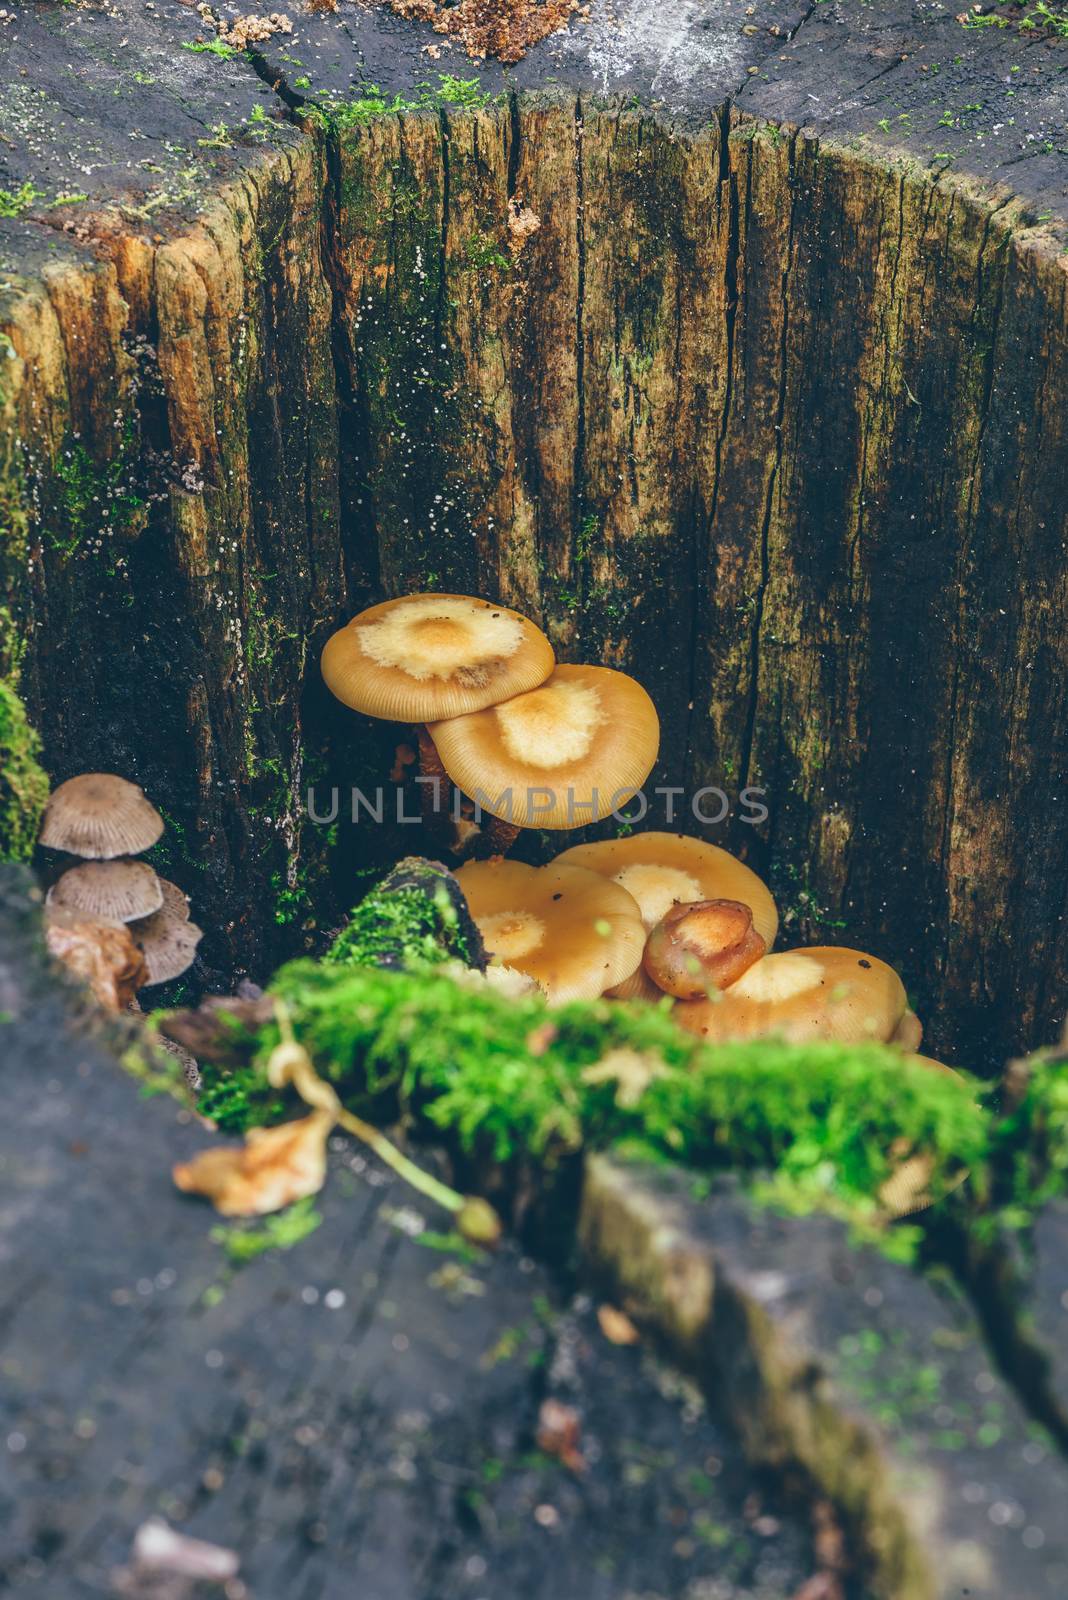 Mushrooms and moss on the tree trunk, by Seva_blsv